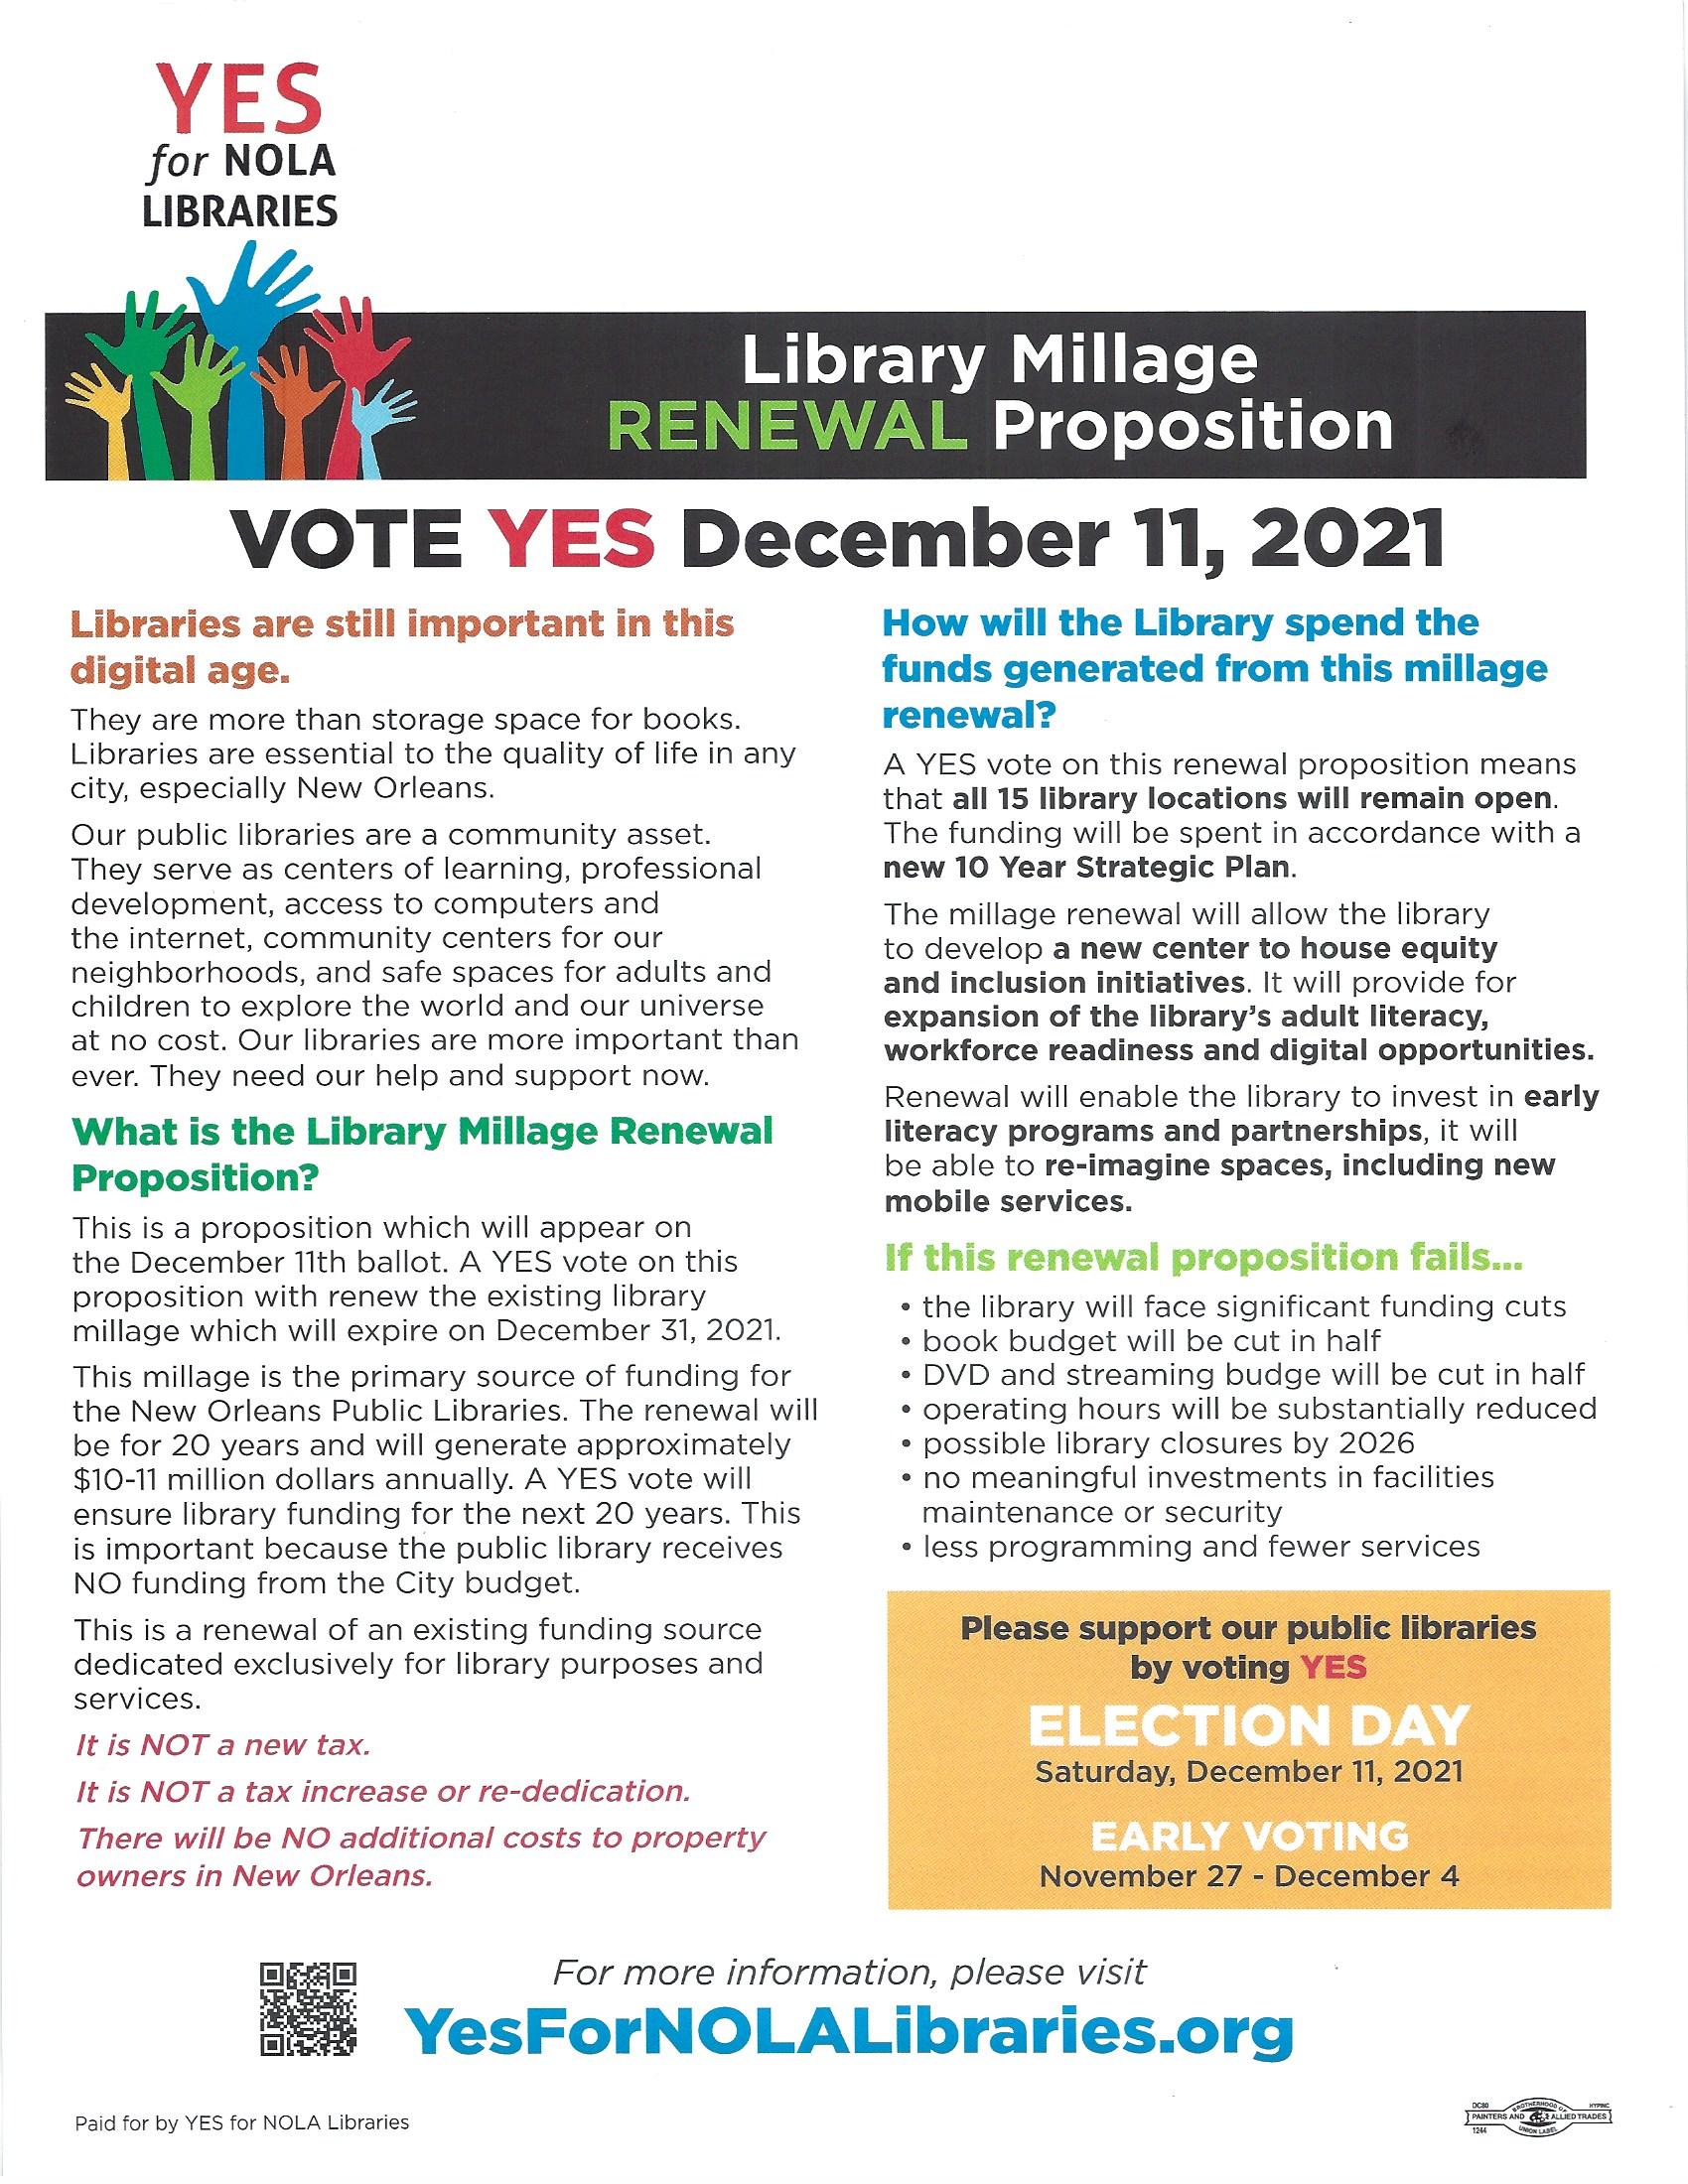 LibraryMillage Renewal Proposition 2021